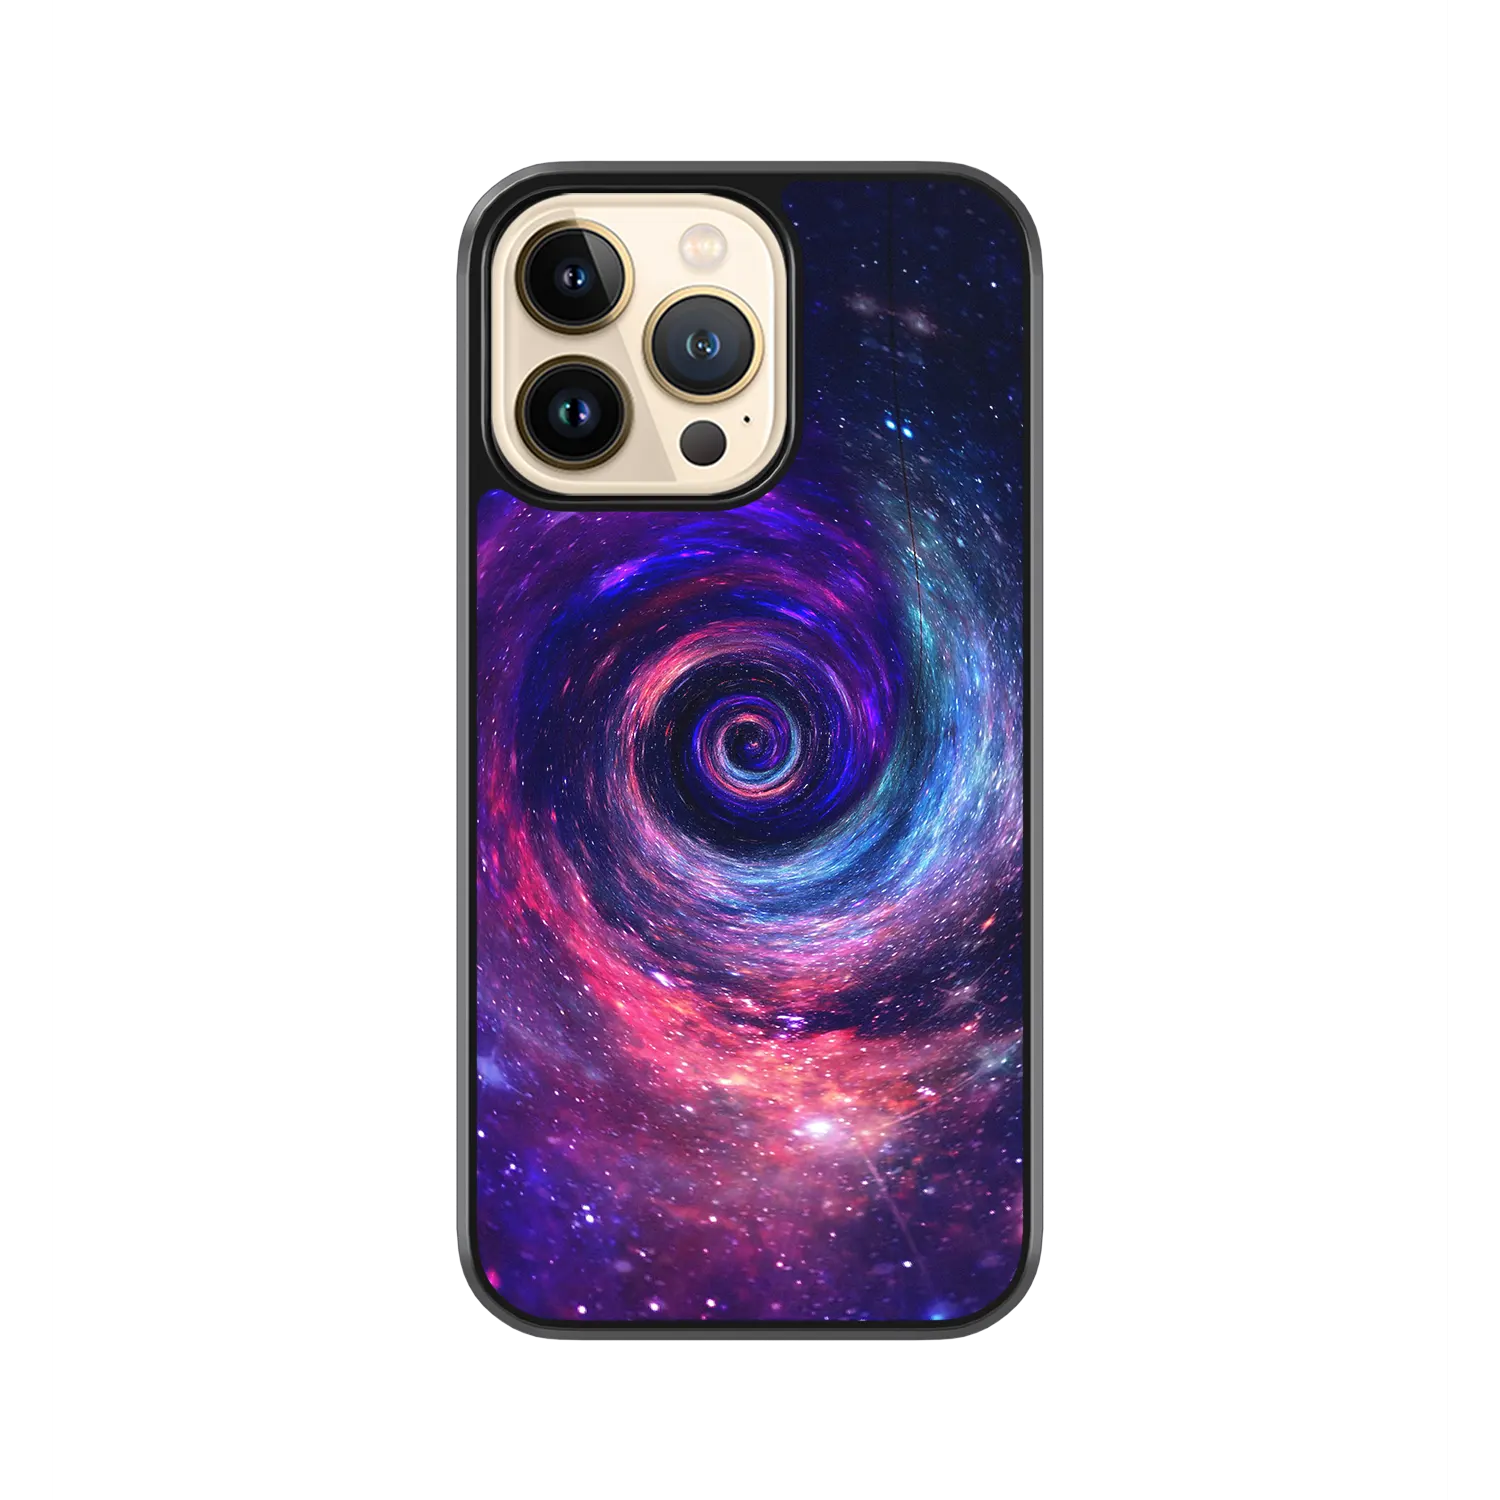 Black Hole iPhone 11 Pro Max Case